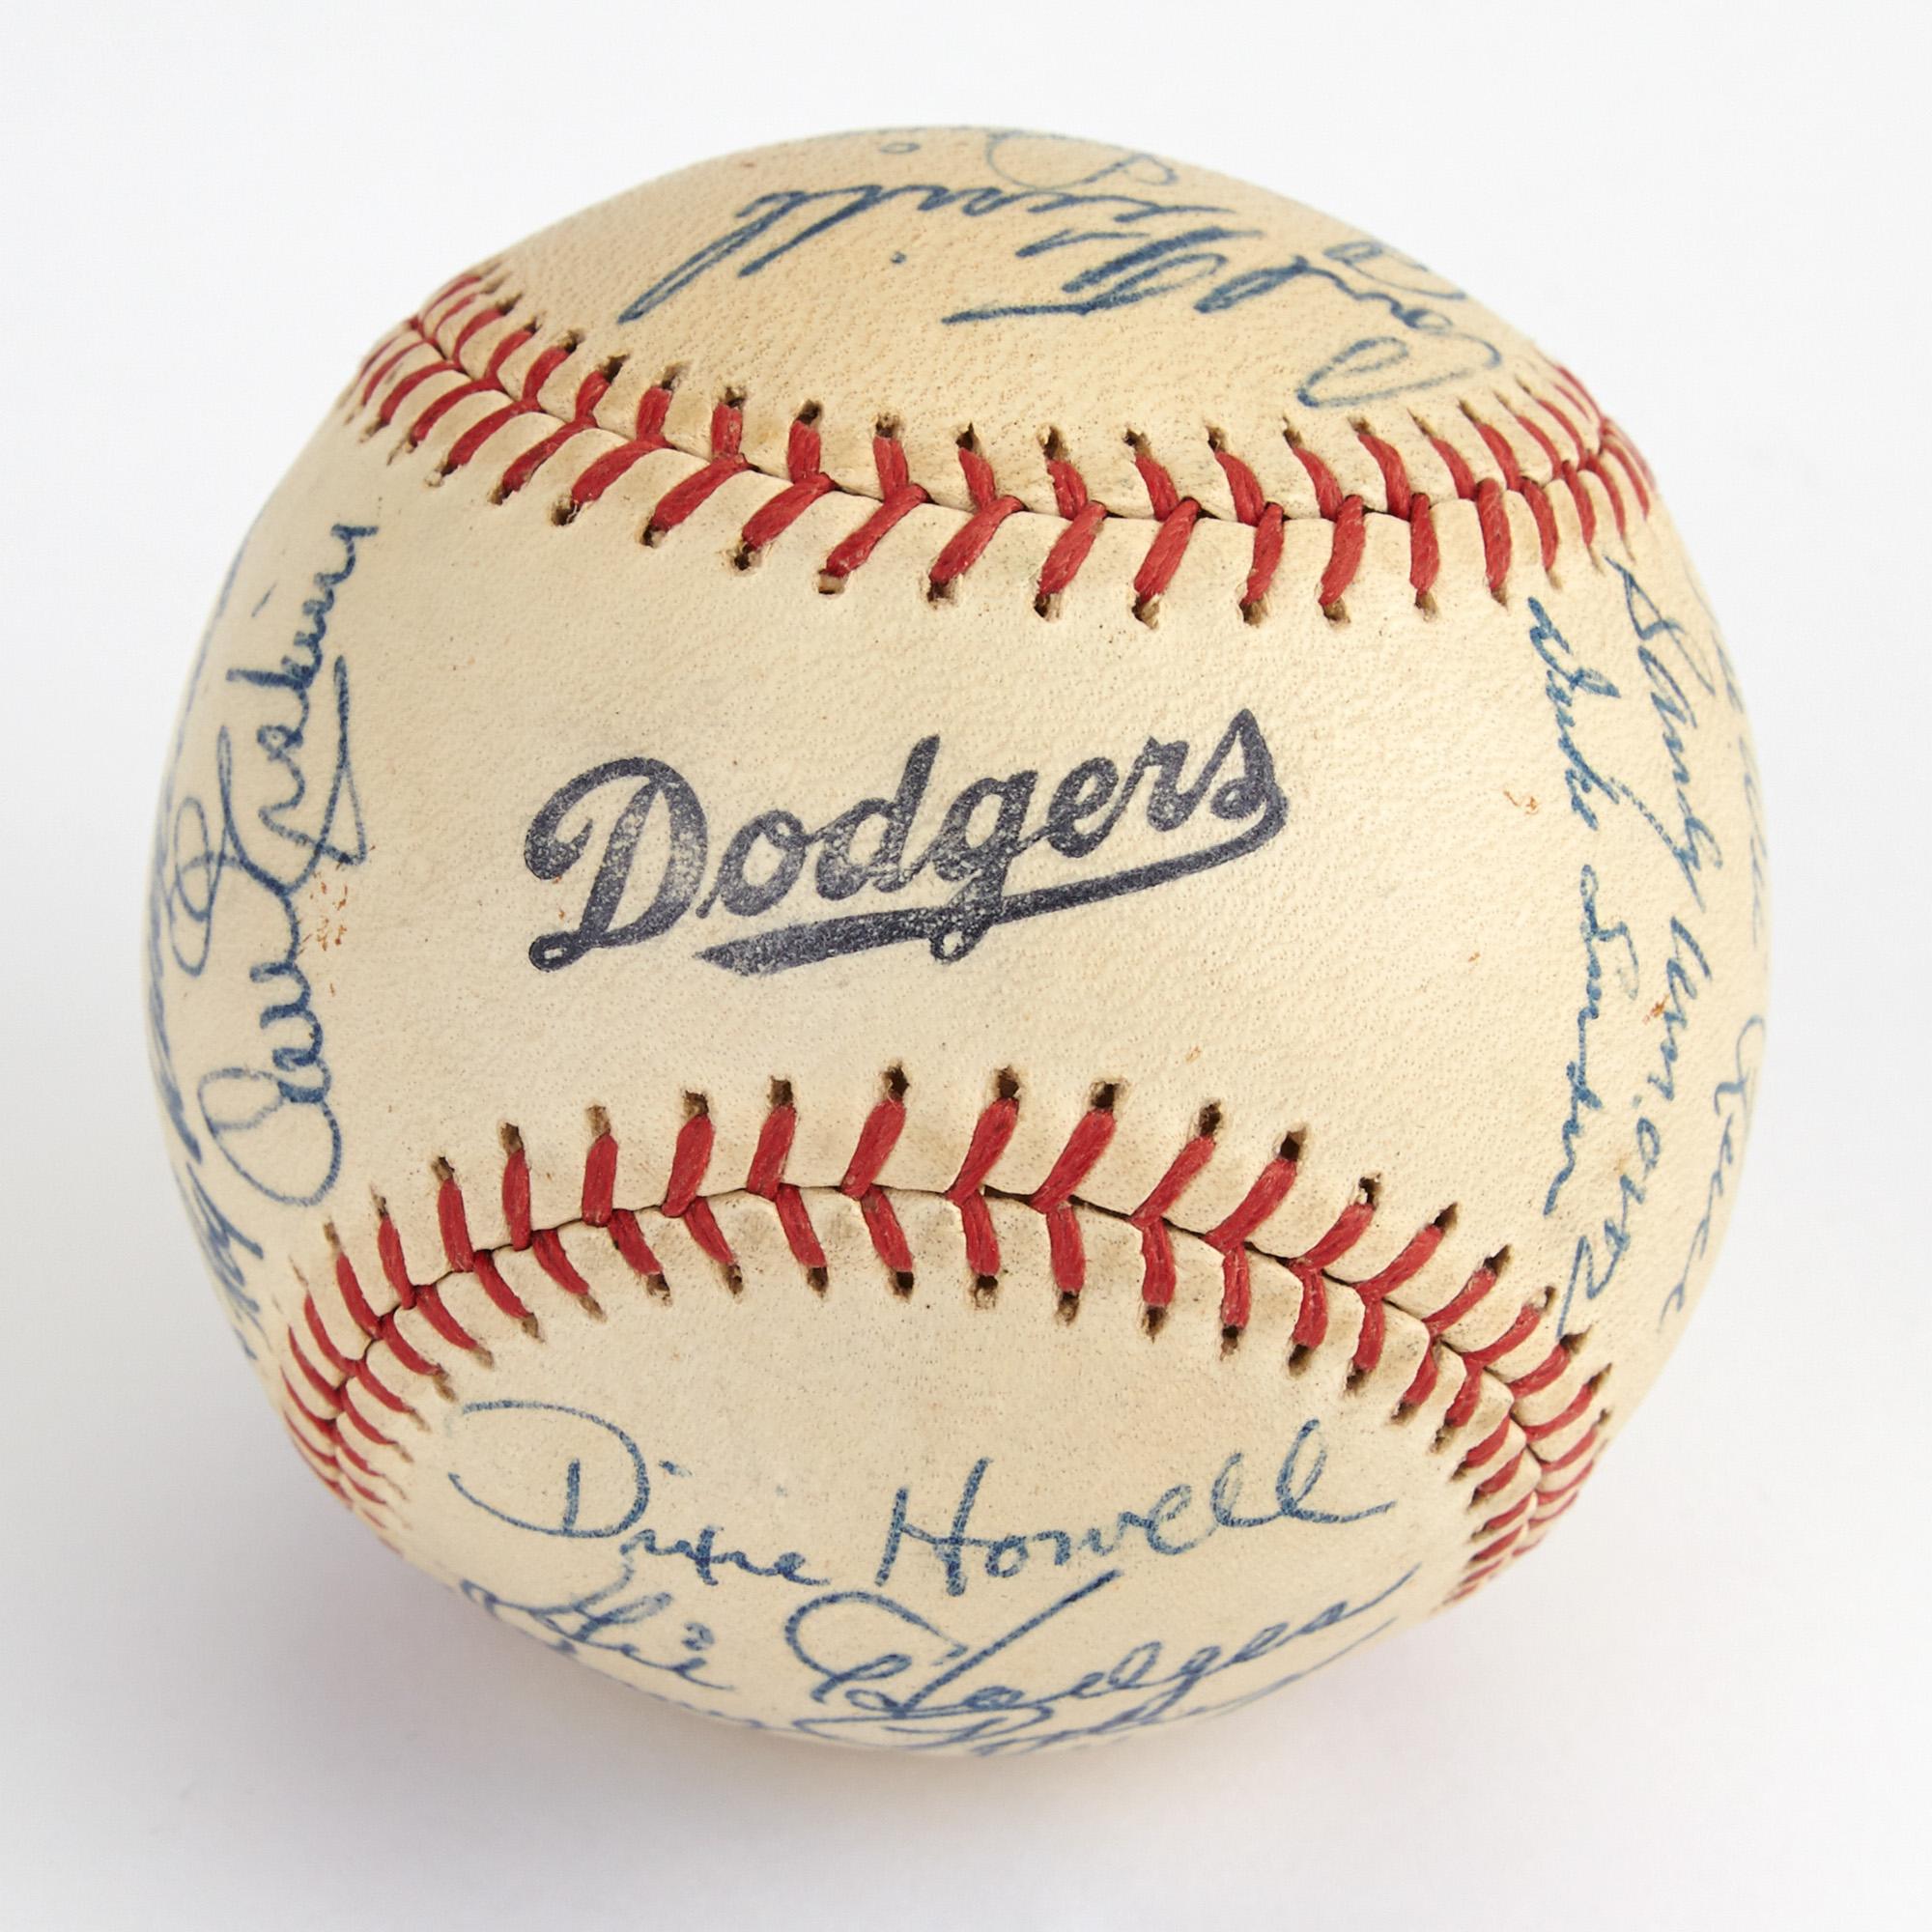 Don Newcombe Signed Baseball (JSA COA) 1955 Brooklyn Dodgers World